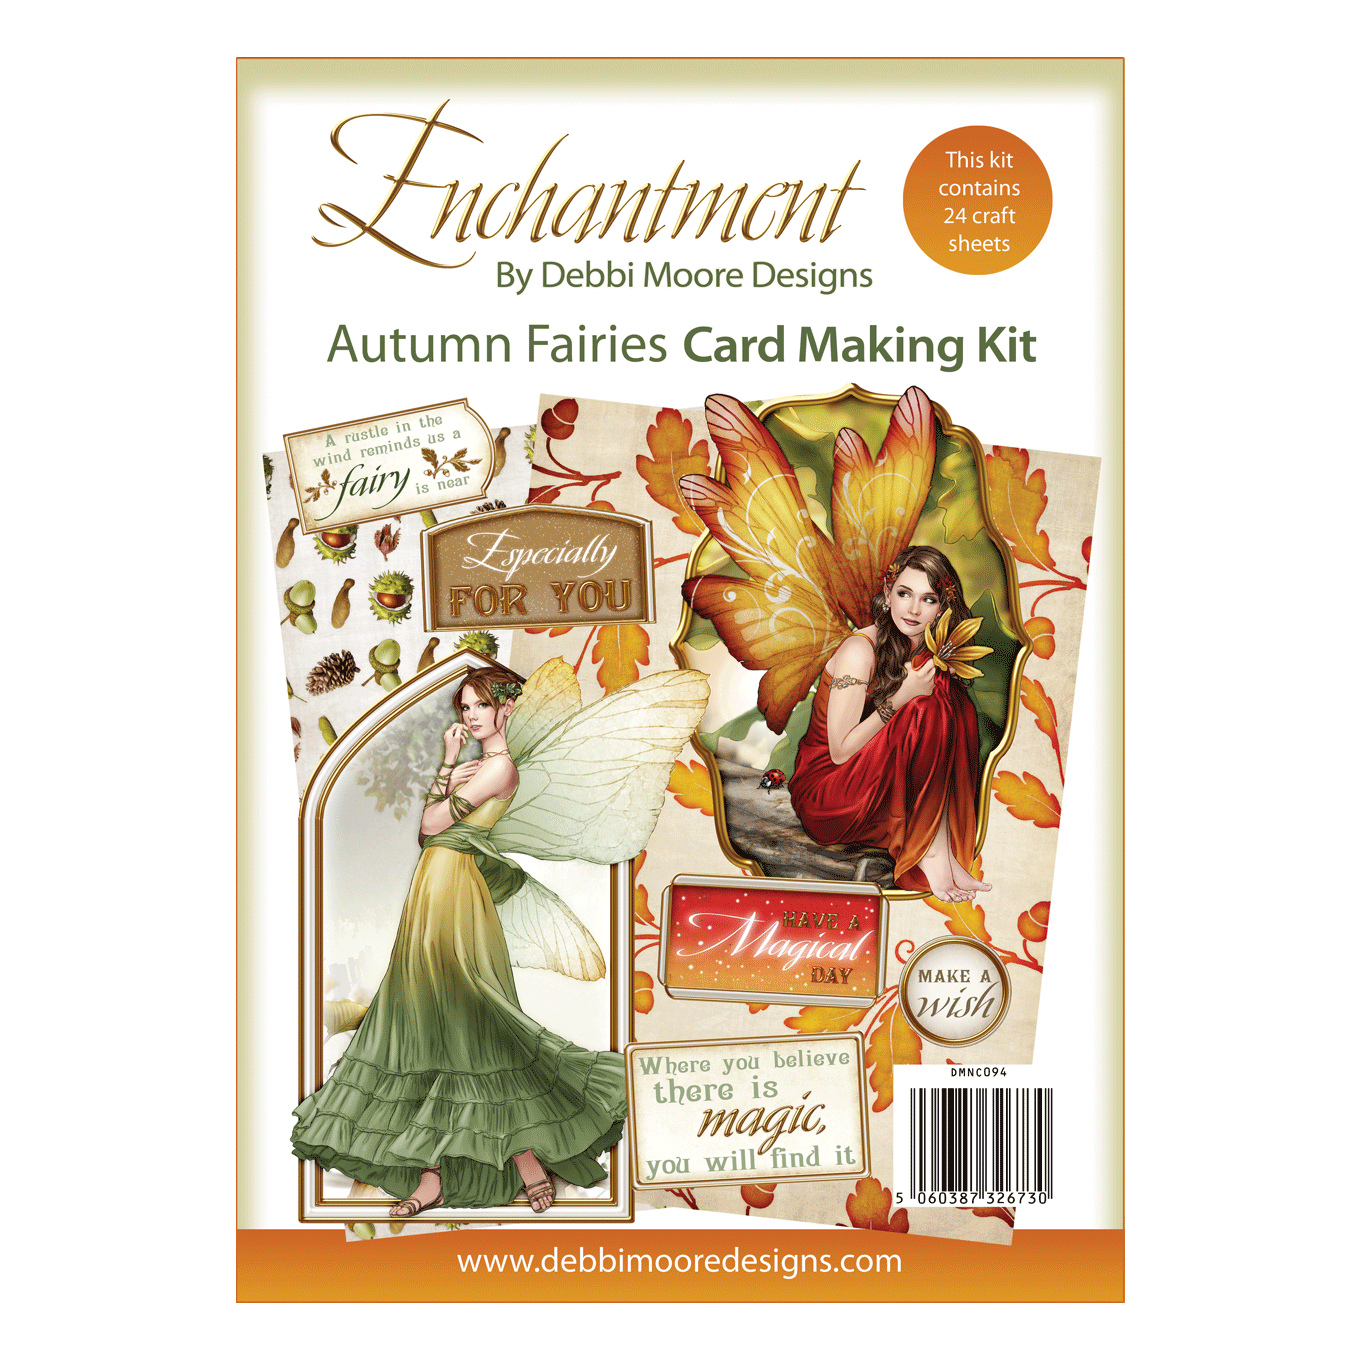 Enchantment Autumn Fairies Cardmaking Kit